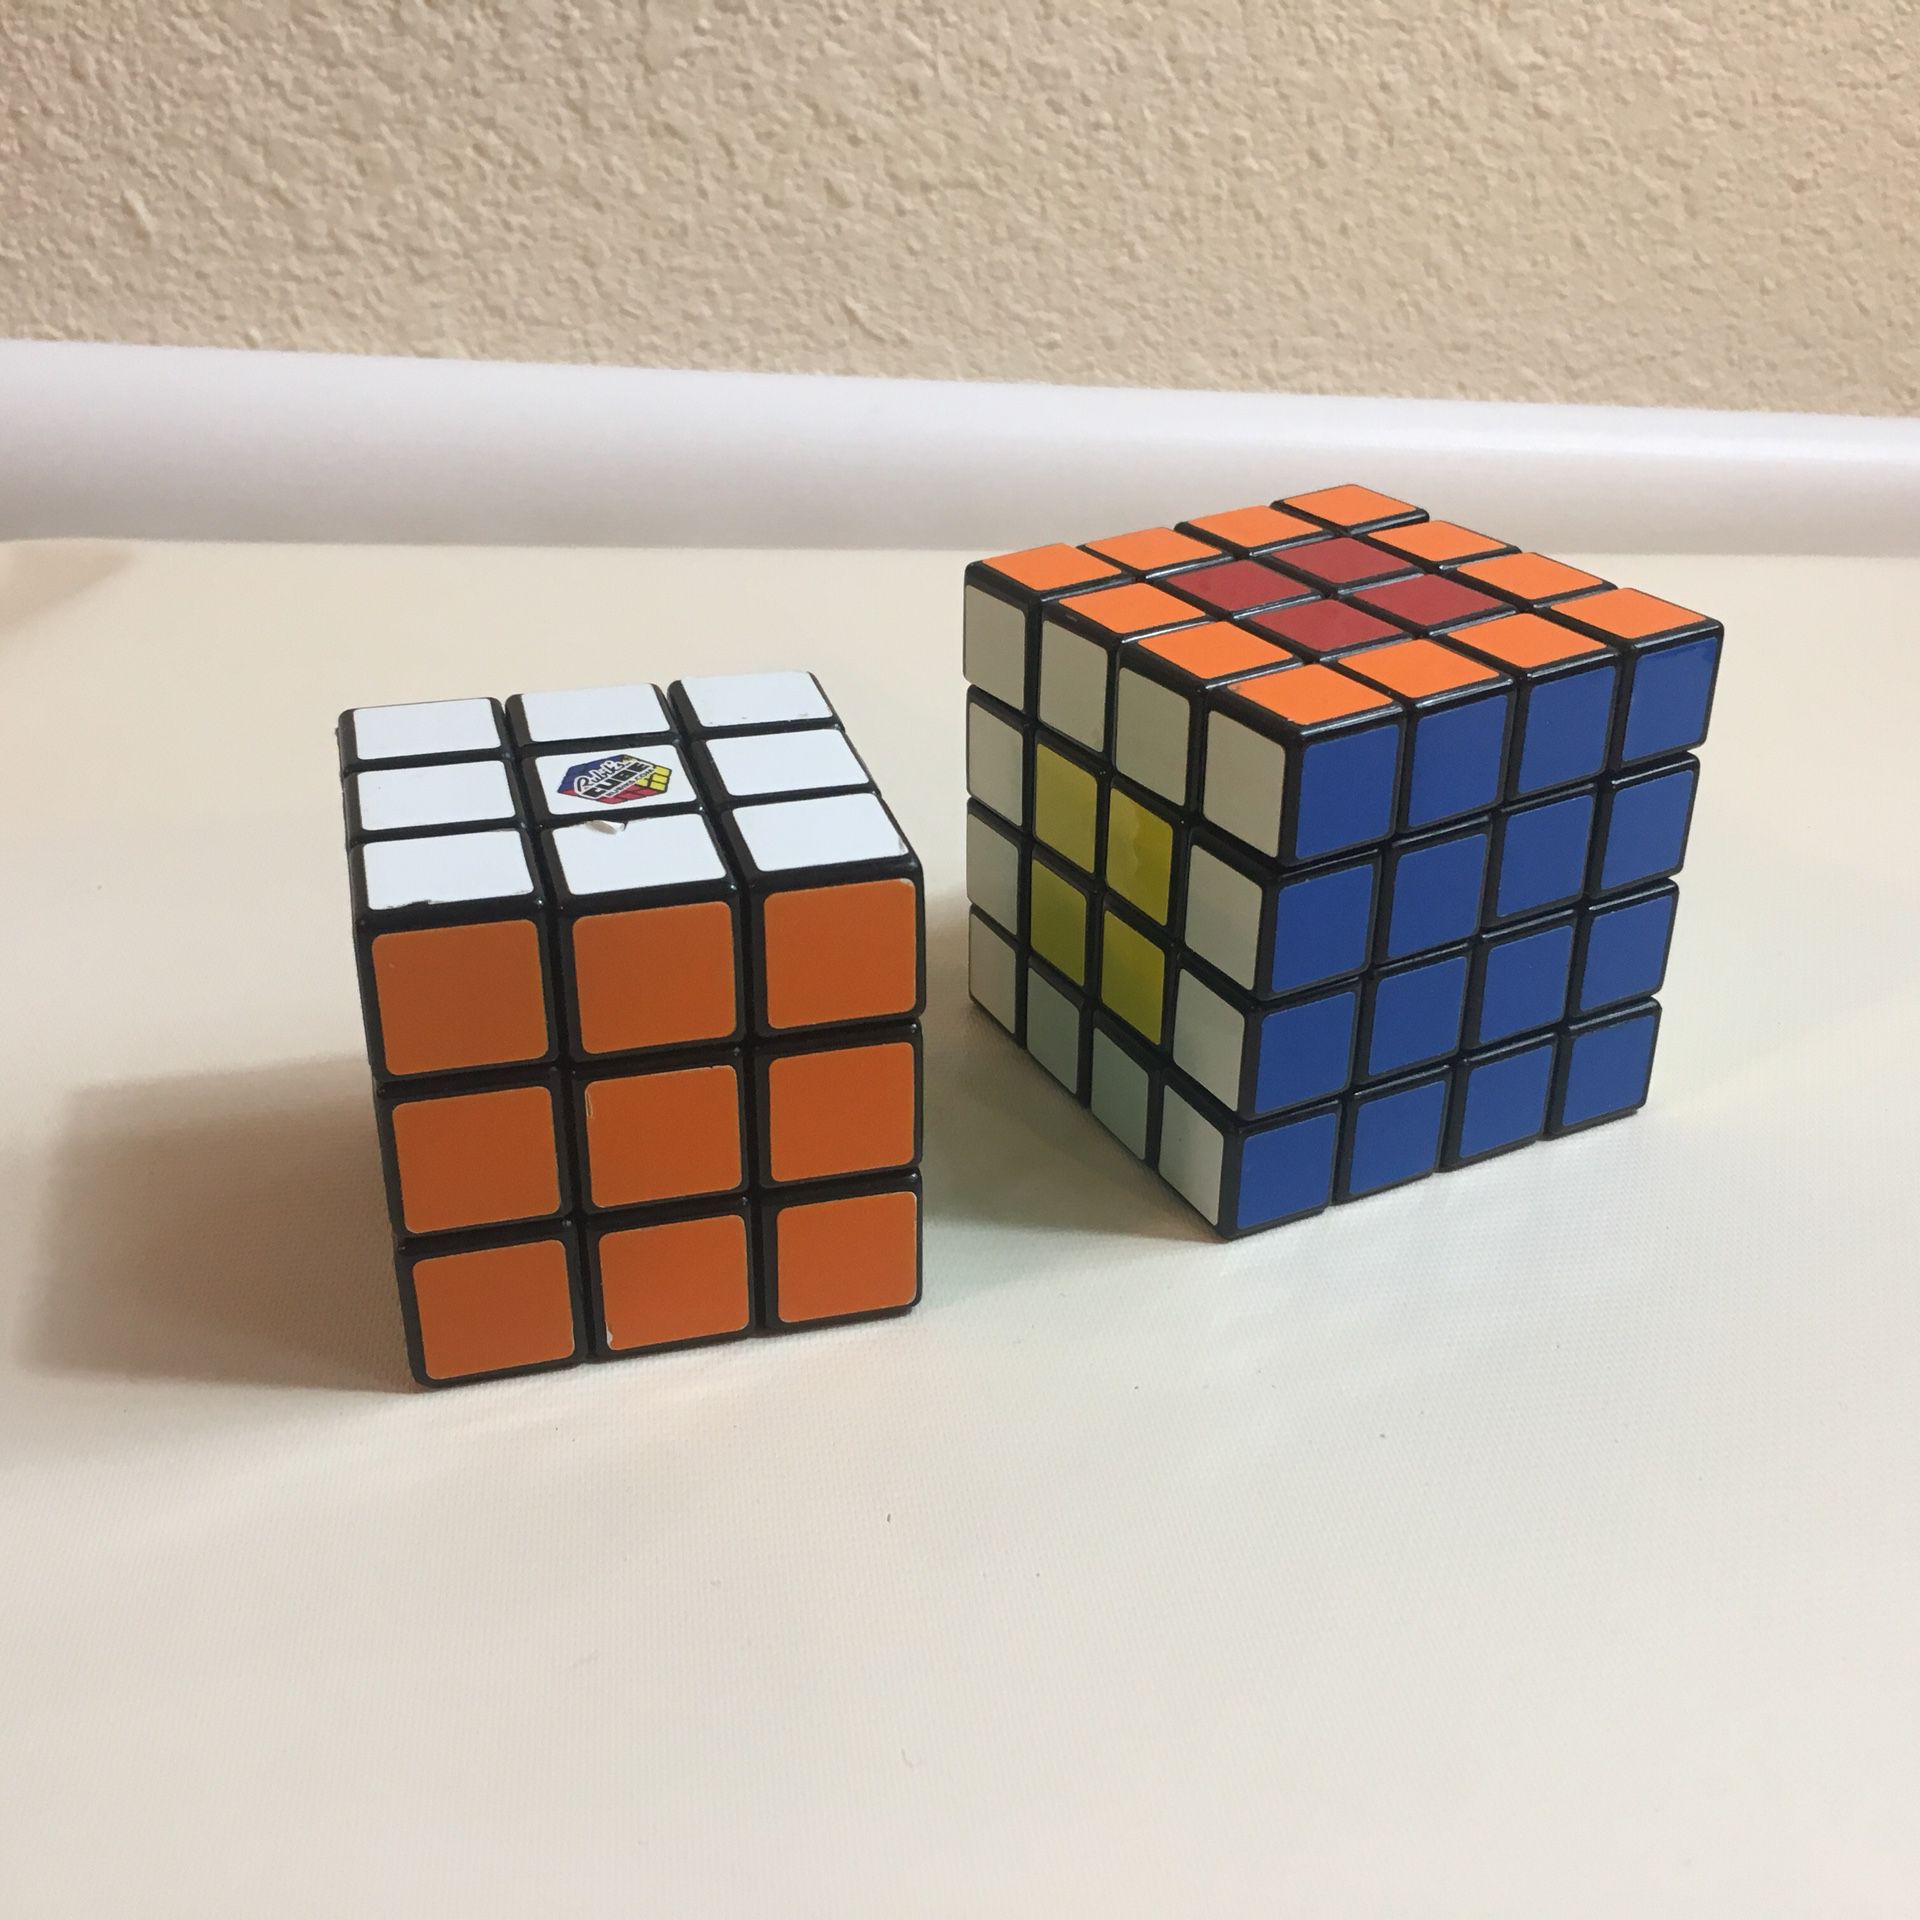 Rubik's Cube Puzzle Toys - 3x3 & 4x4